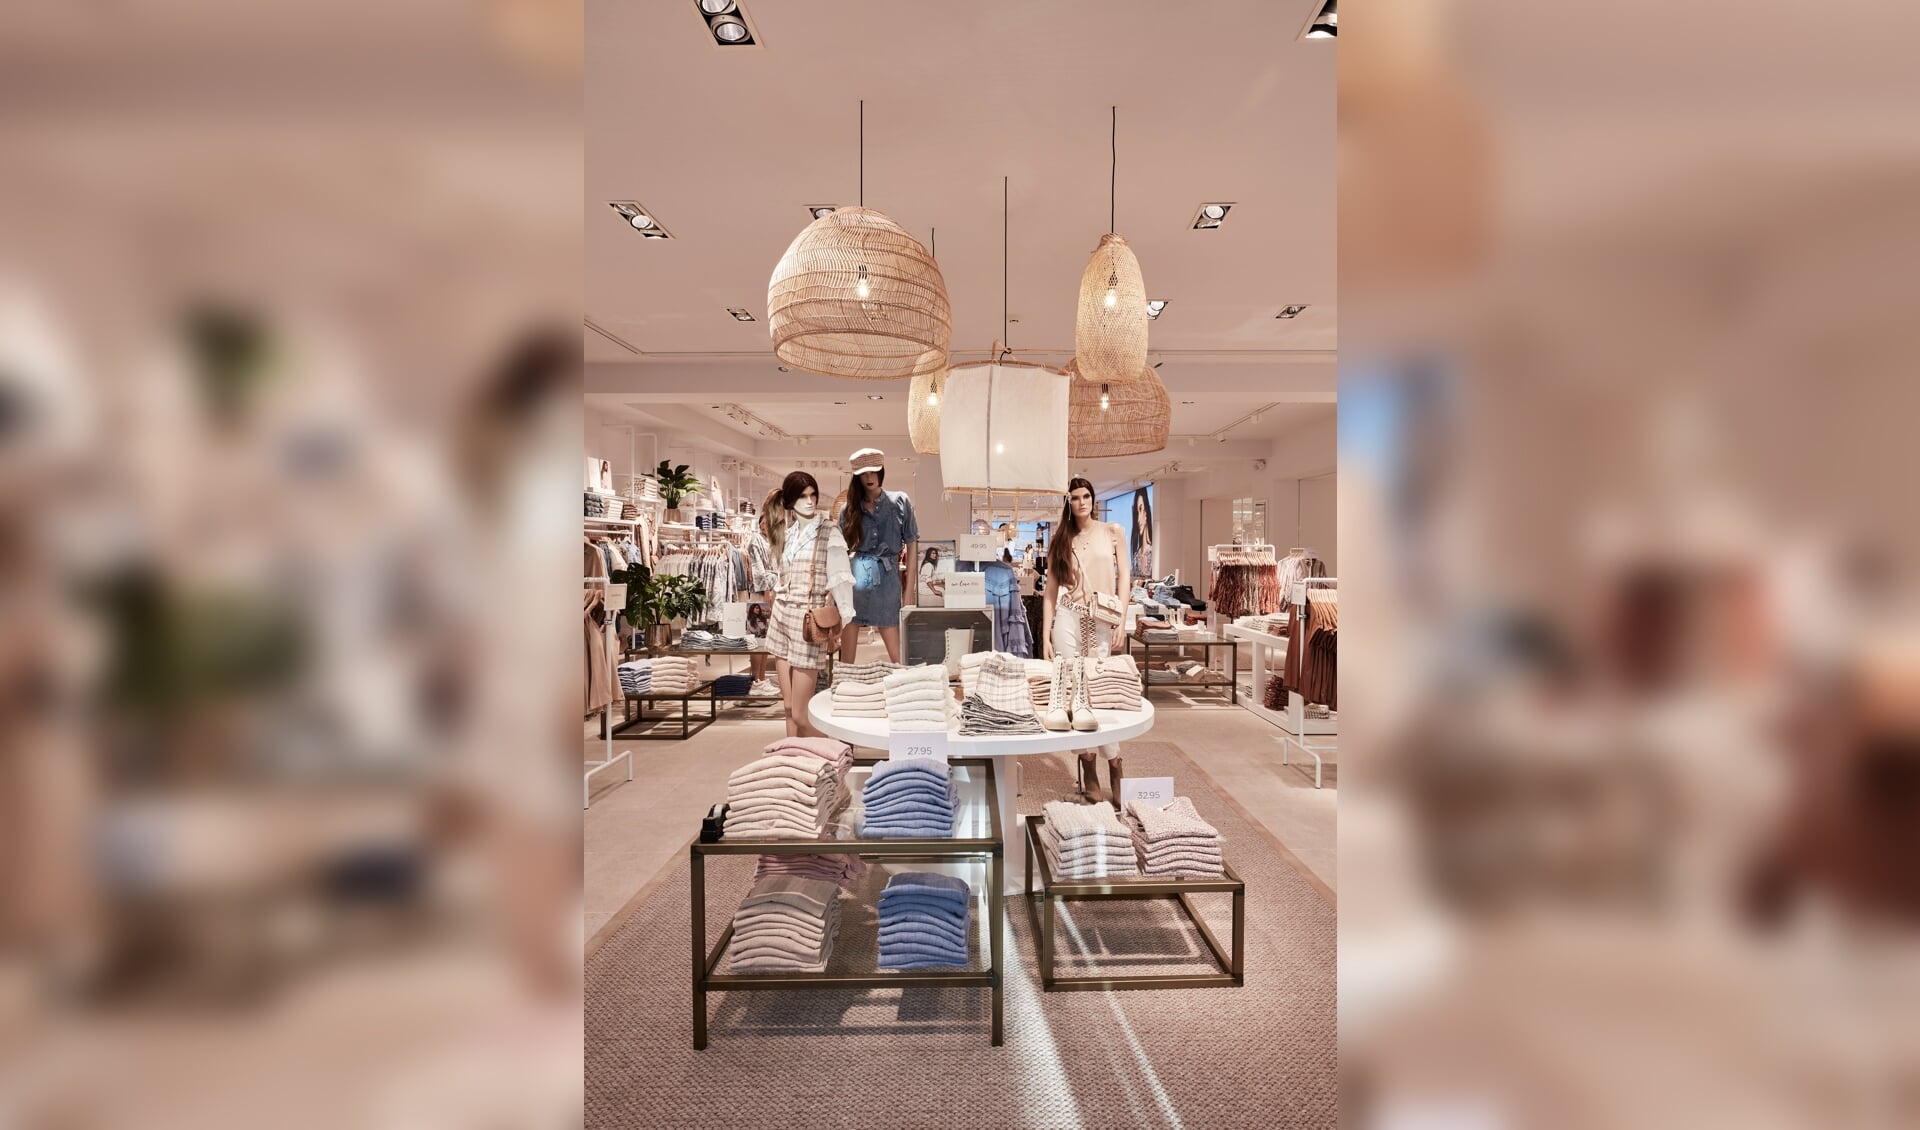 Cotton Club opent nieuwe winkel in Amersfoort - uit regio Amersfoort